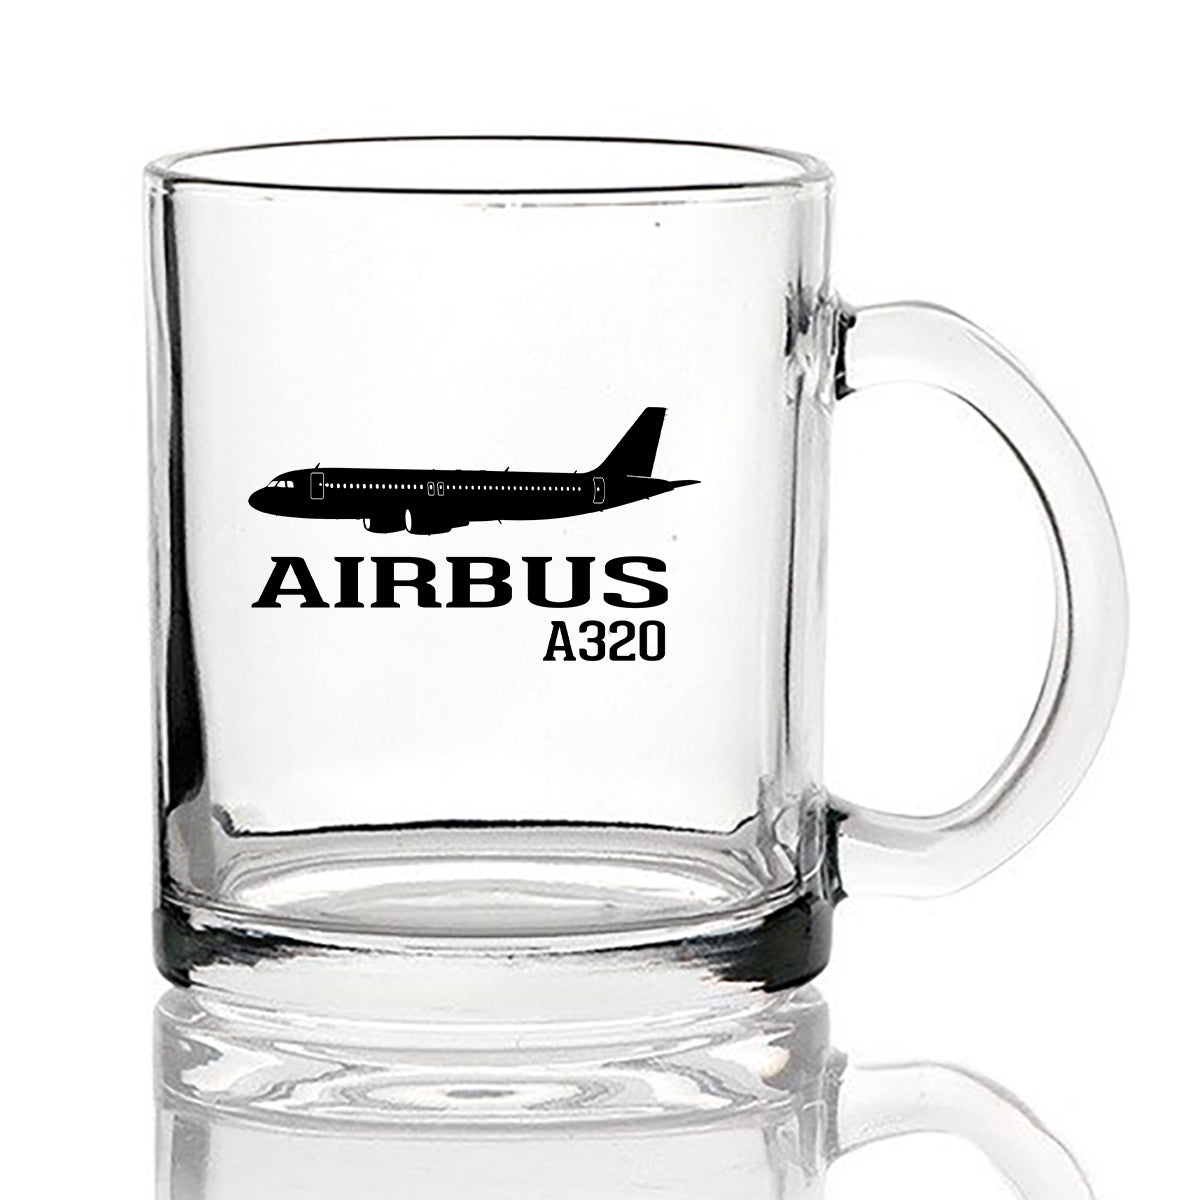 Airbus A320 Printed Designed Coffee & Tea Glasses